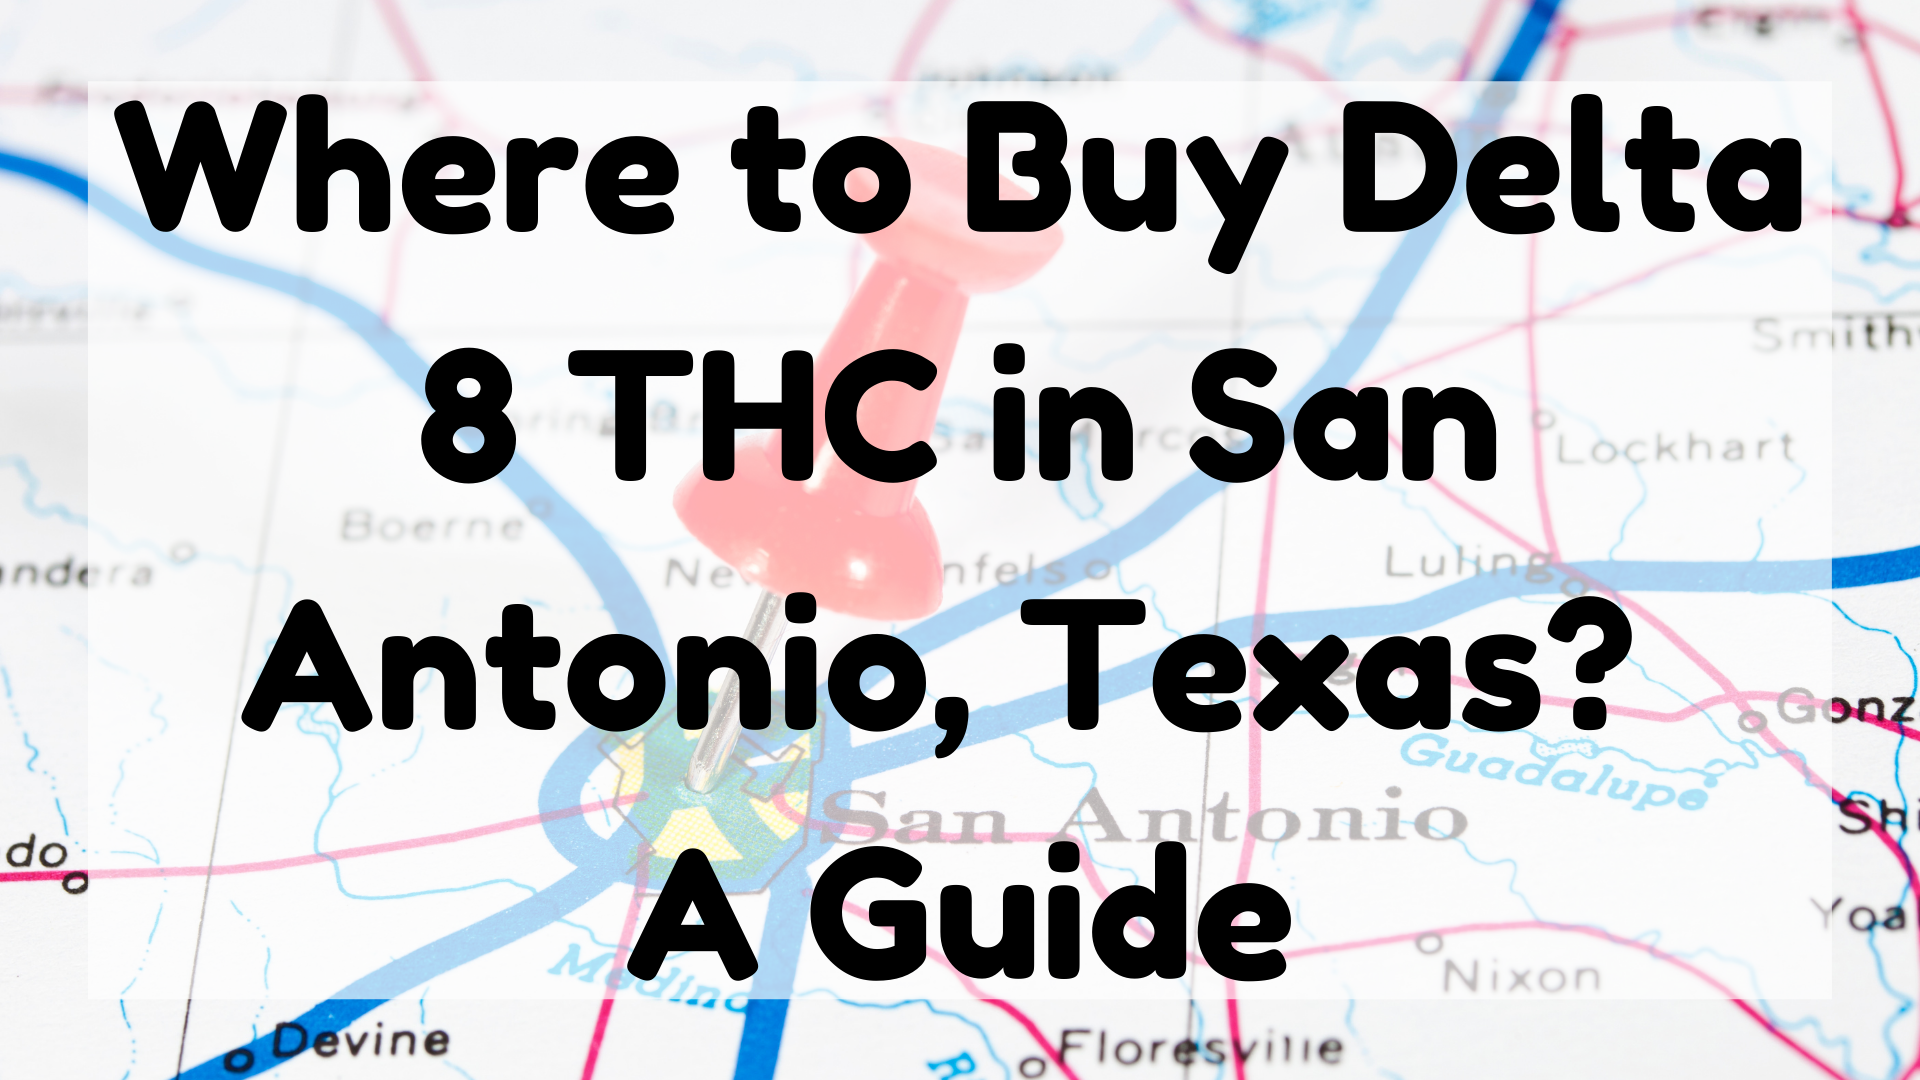 Delta 8 THC in San Antonio, Texas